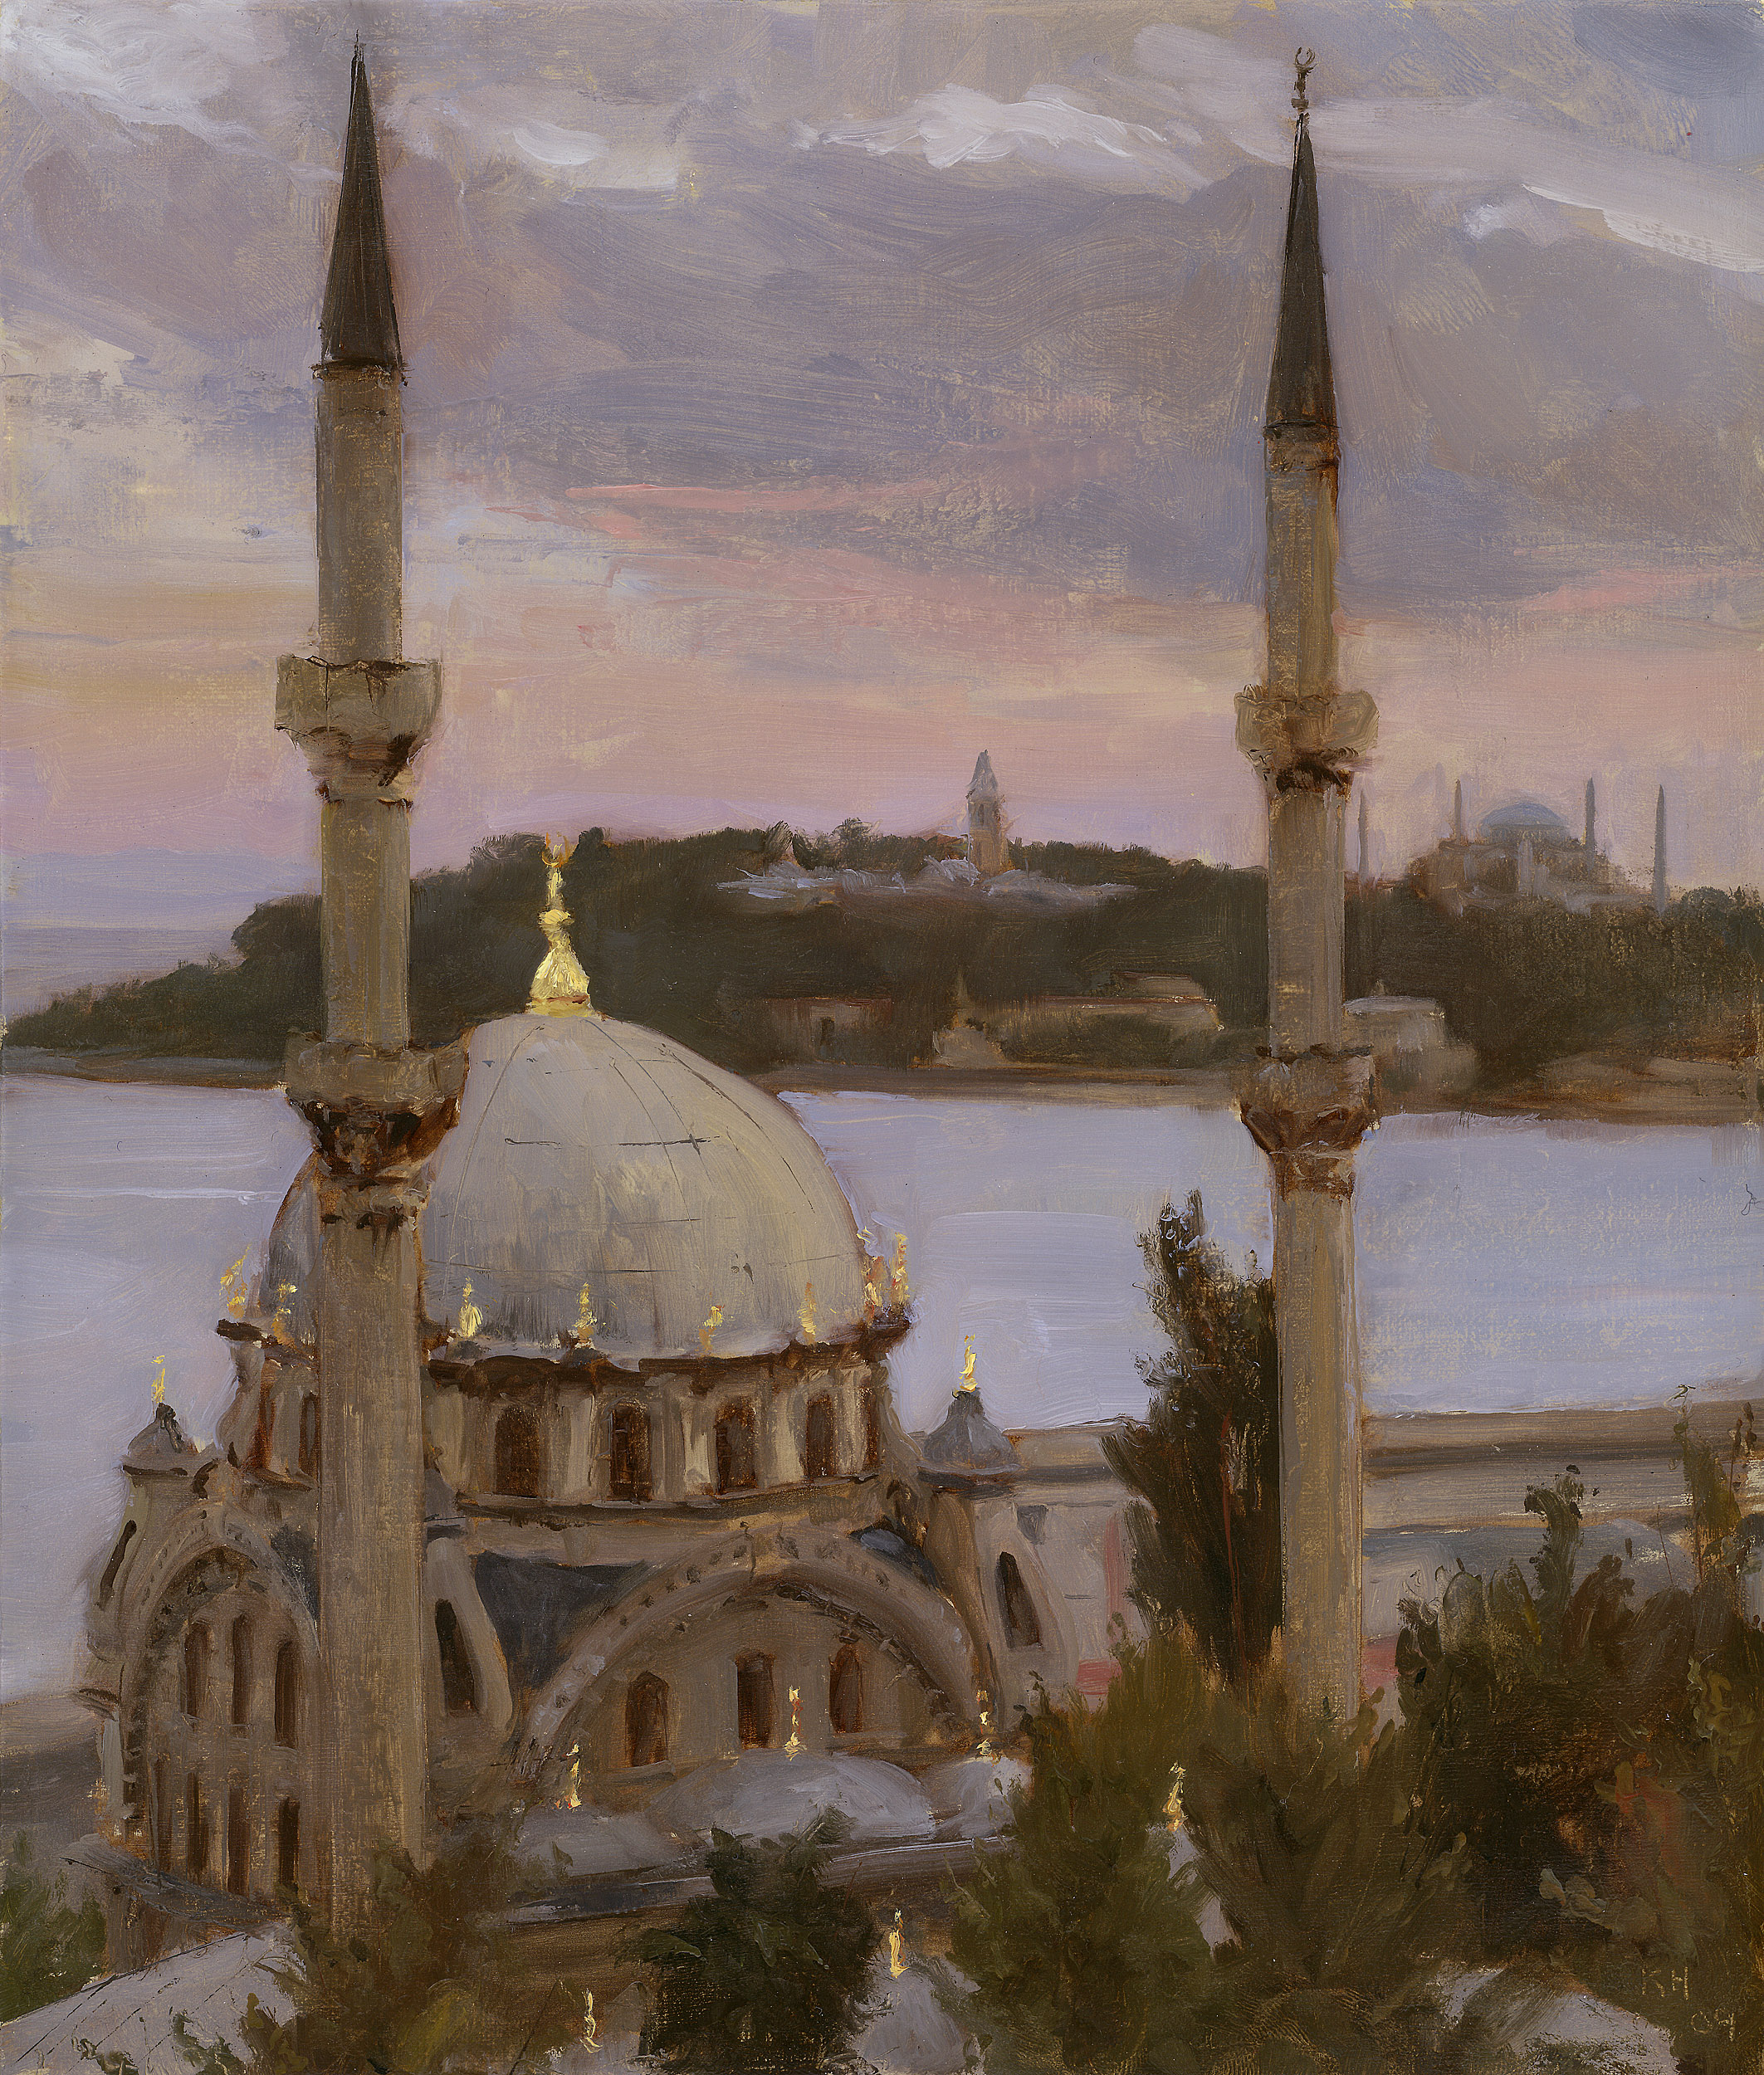 Kenny Harris, "Nusretiye Mosque," 10 x 8.5 inches, Oil on linen 